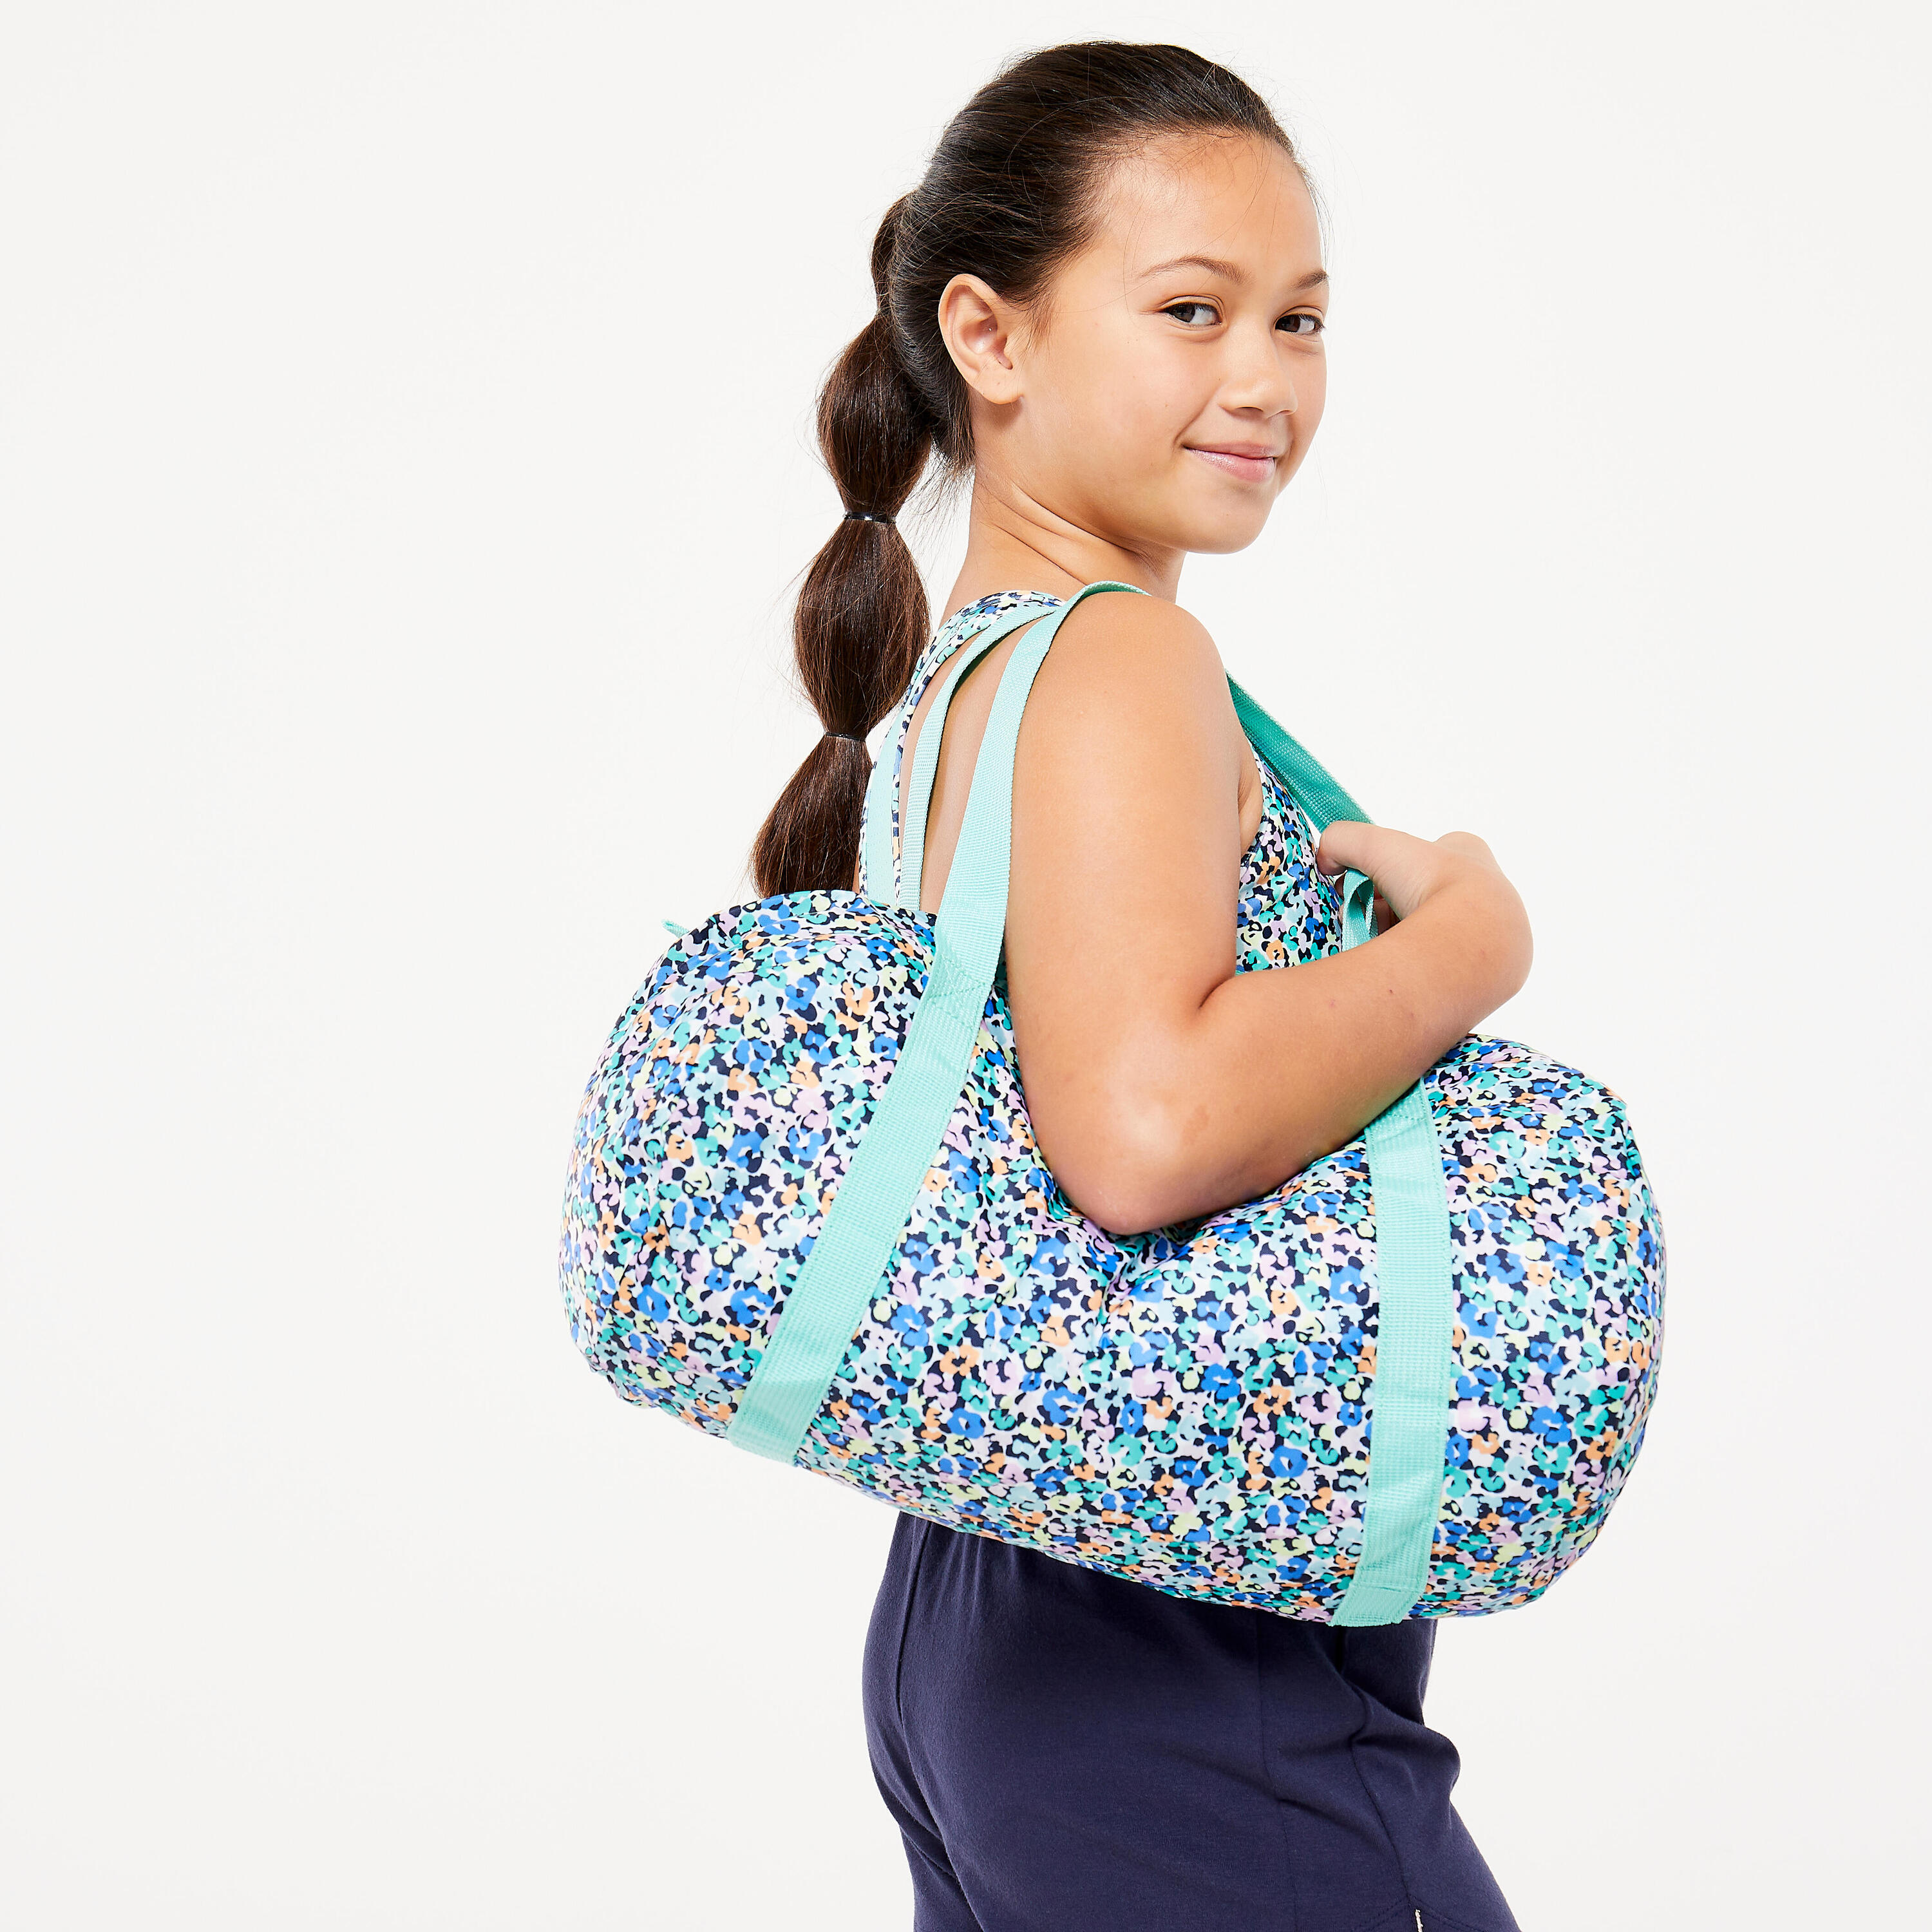 15 L Foldable Sports Bag - Multicoloured 1/8